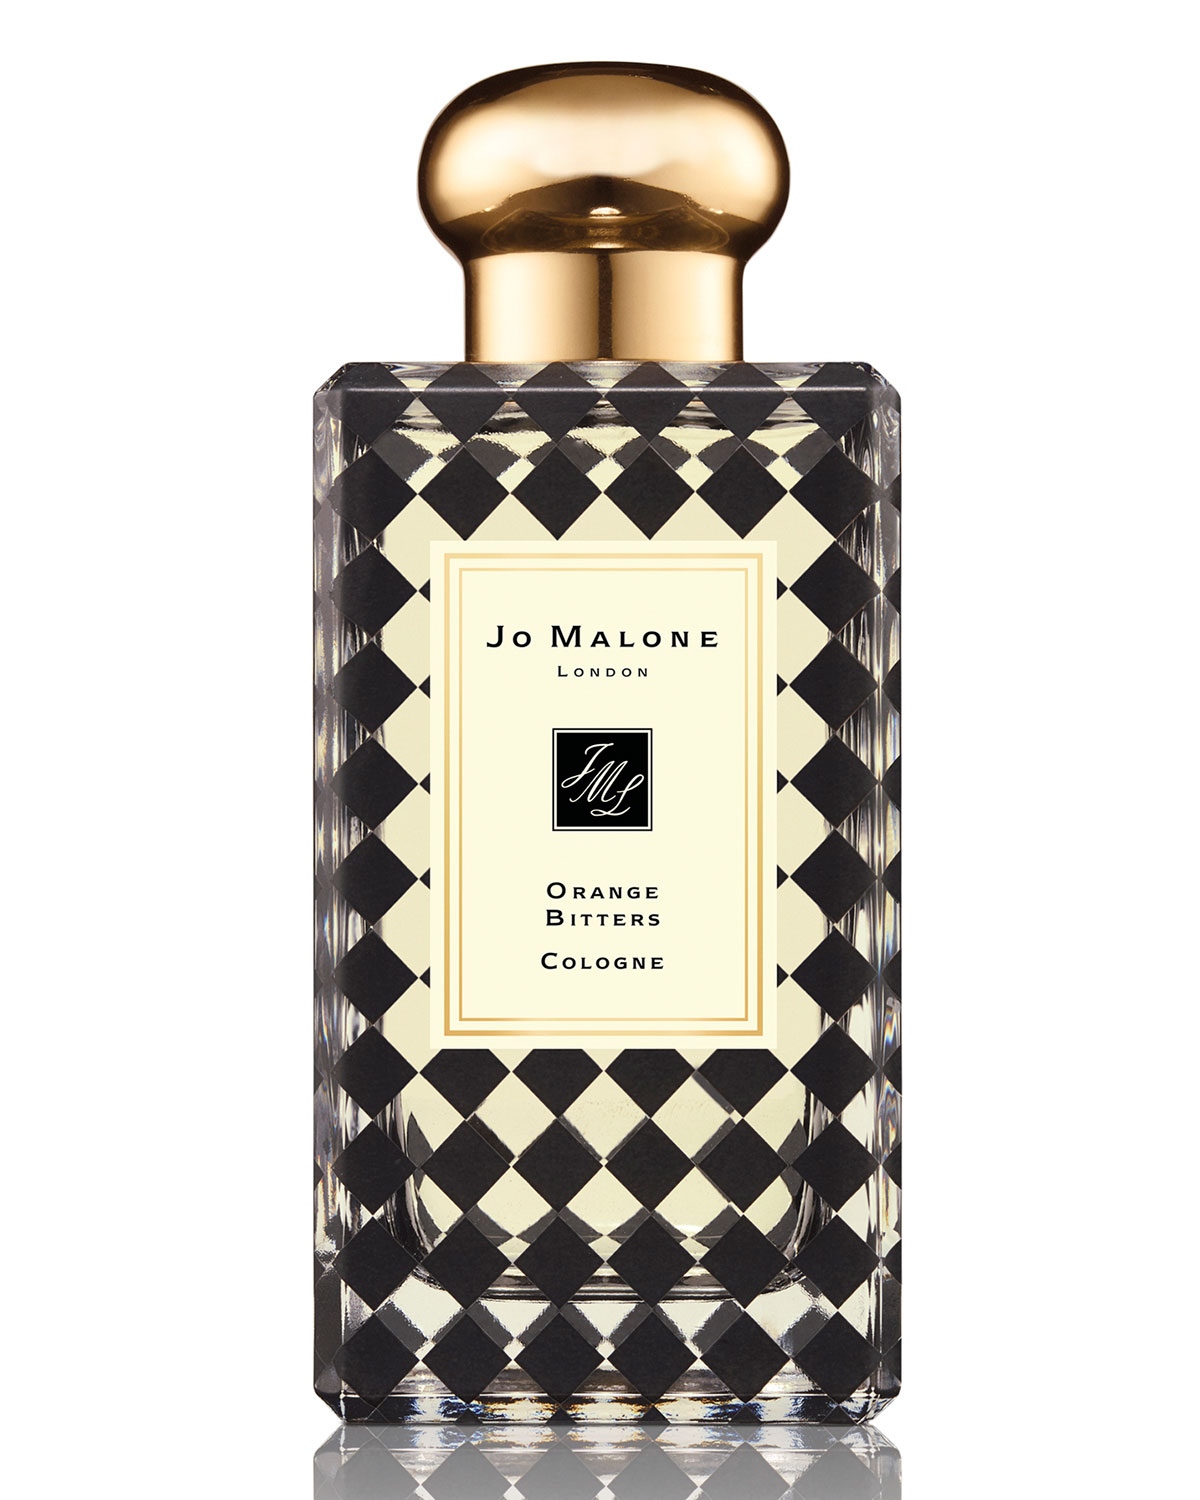 Orange Bitters Jo Malone London perfume - a fragrance for women and men